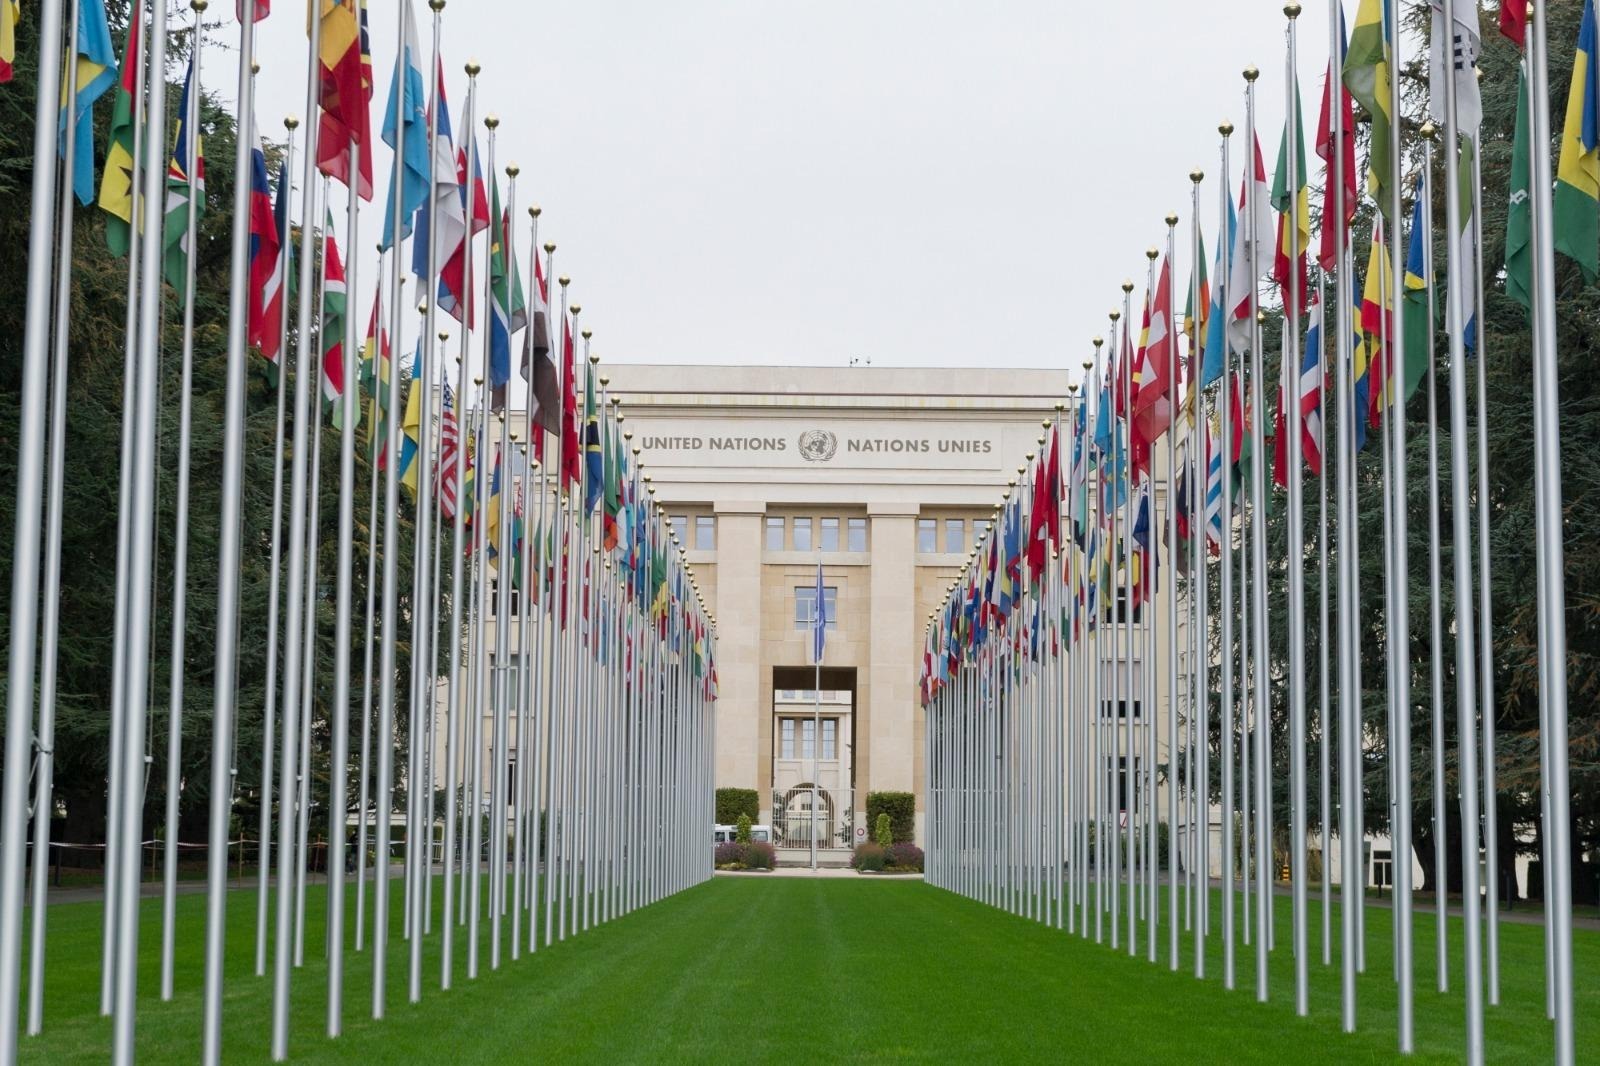 United Nations Headquarters
Photo: World Tourism Organization